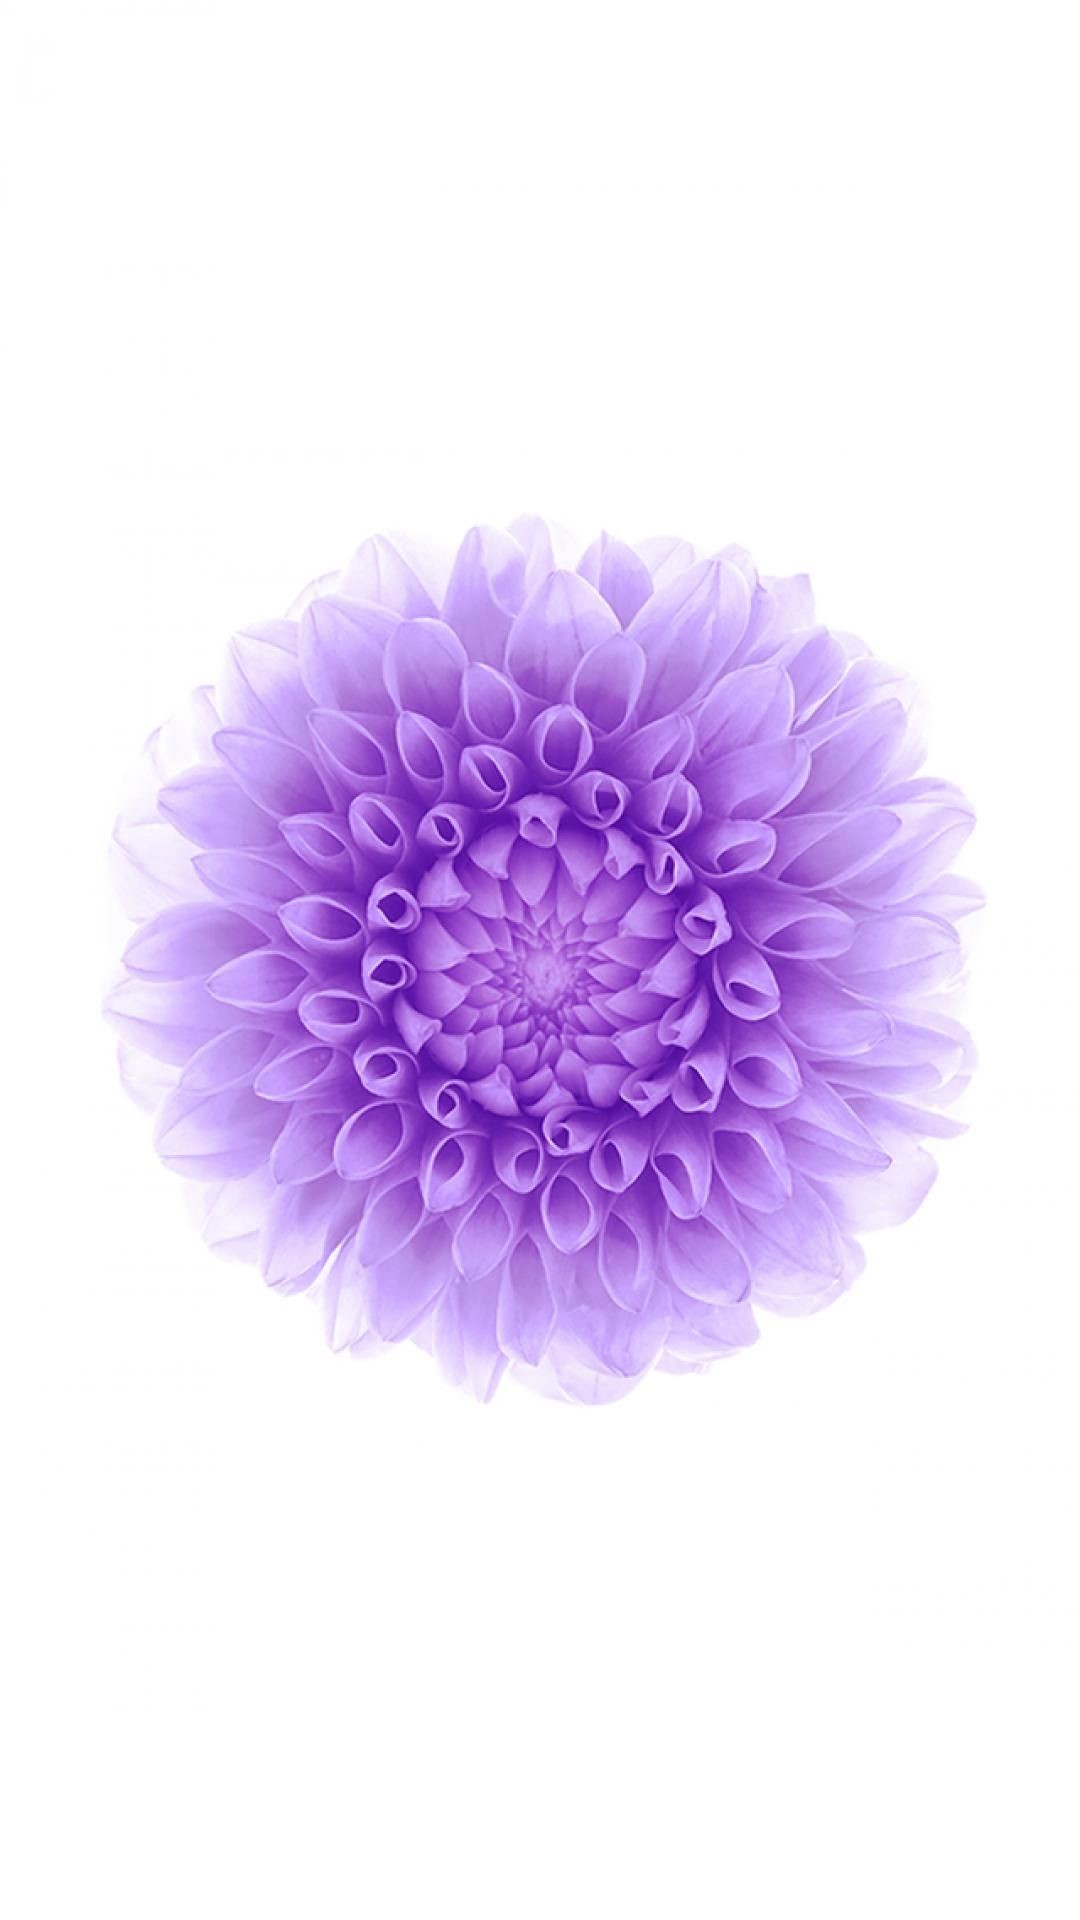 1080x1920 #iPhone6wallpaper #purple #flower